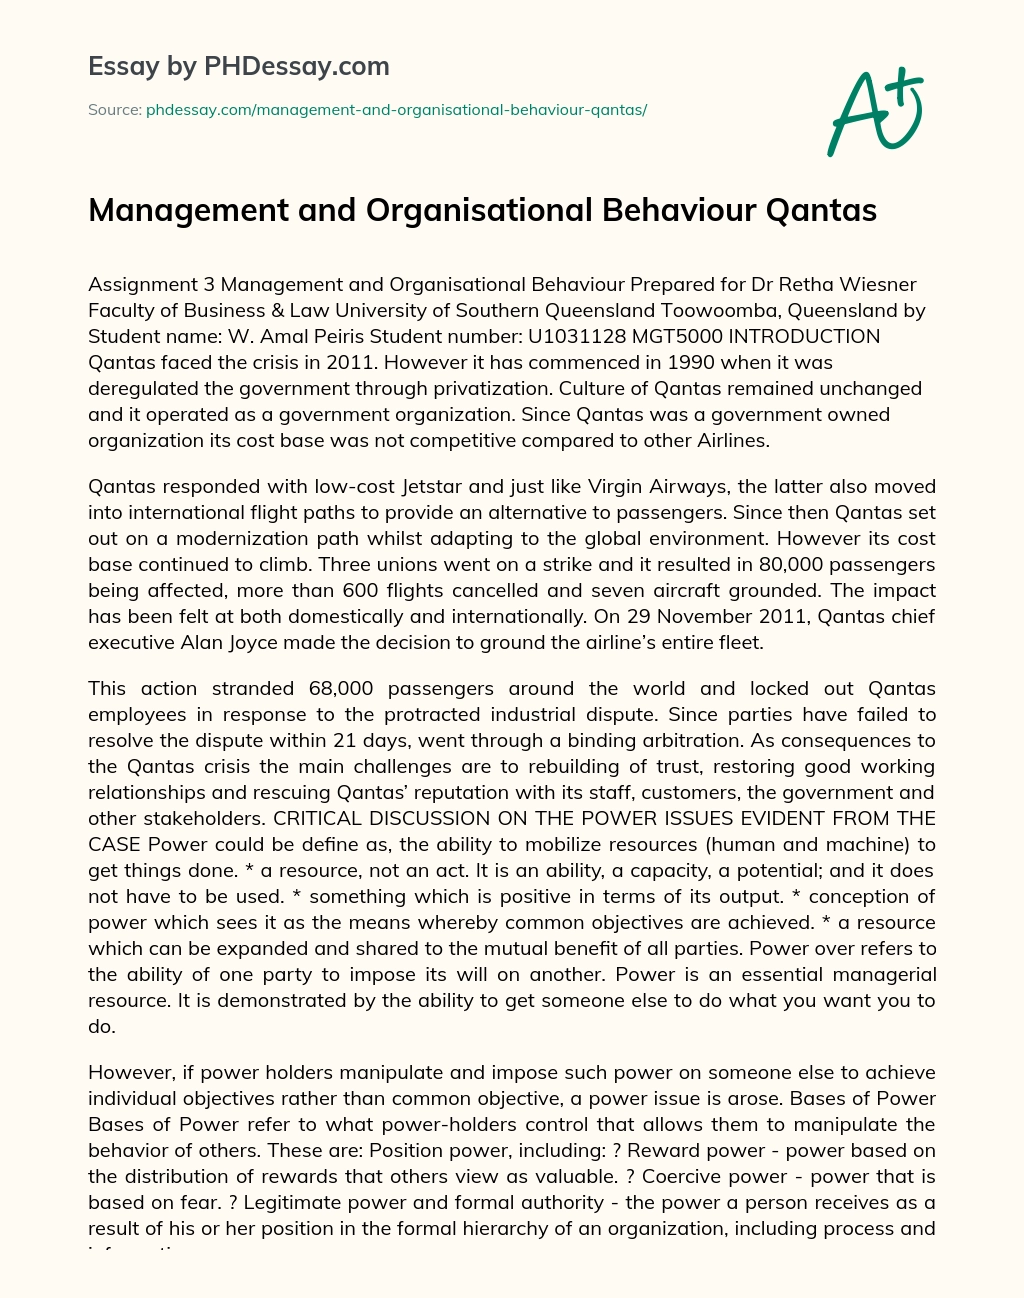 Management and Organisational Behaviour Qantas essay